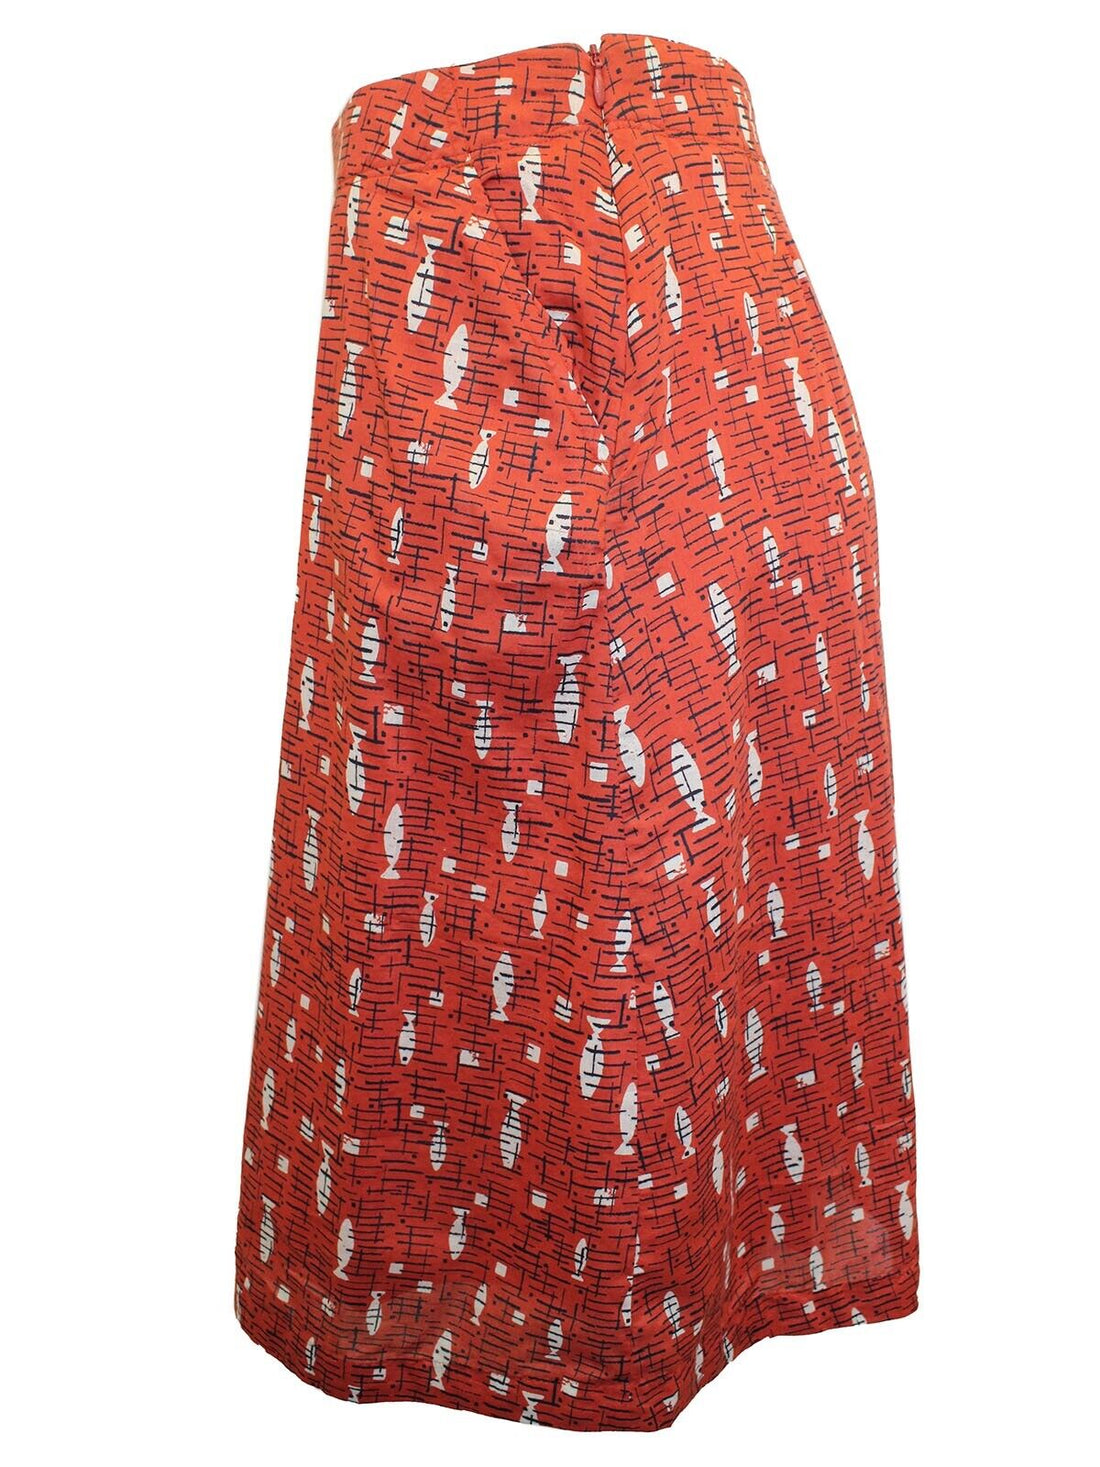 EX Seasalt Brick Red Paint Pot Skirt in Size 16 see description for measurements